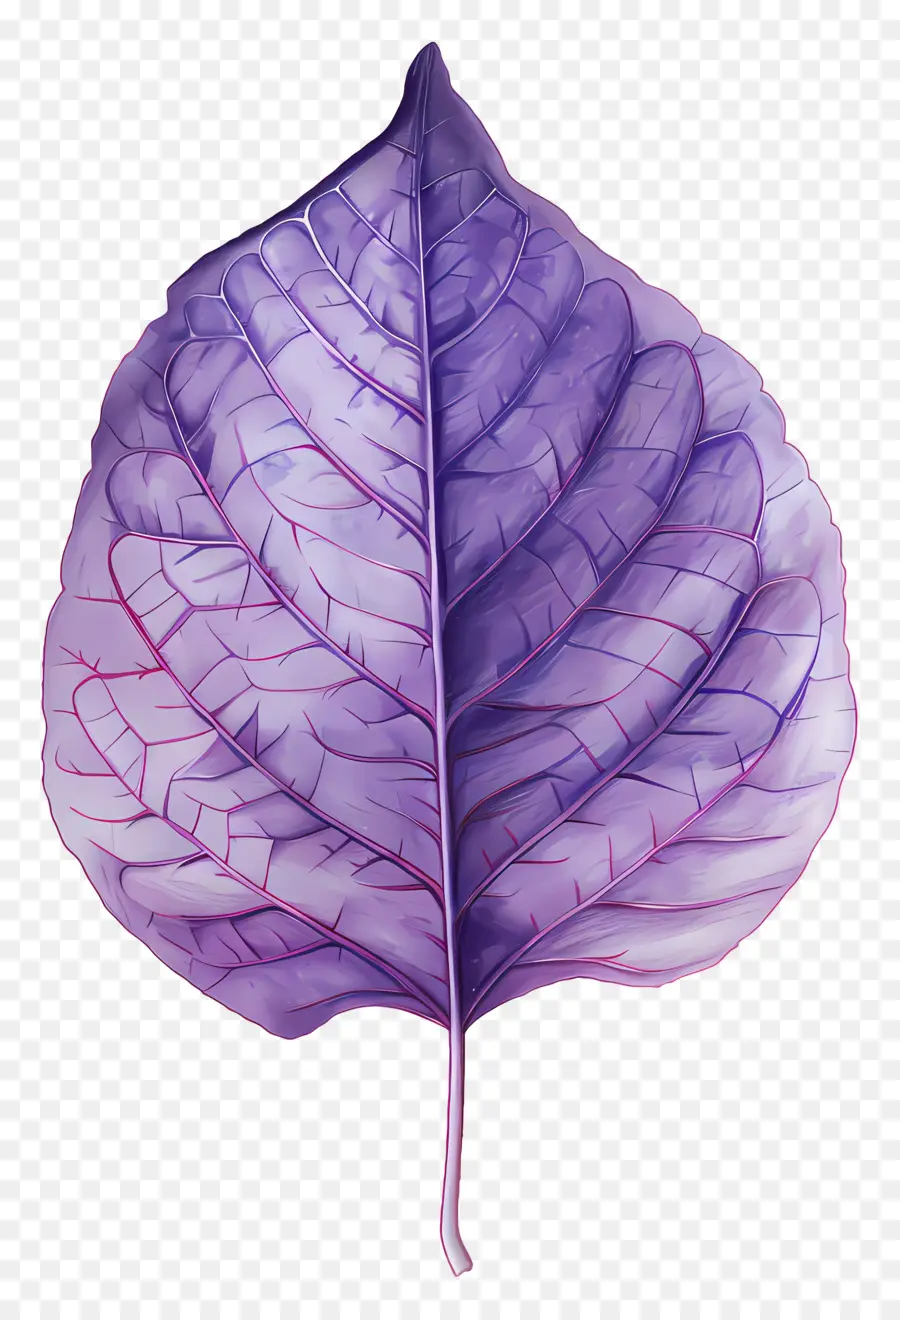 Blatt textur - Aquarellmalerei aus lila Blatt mit Venen